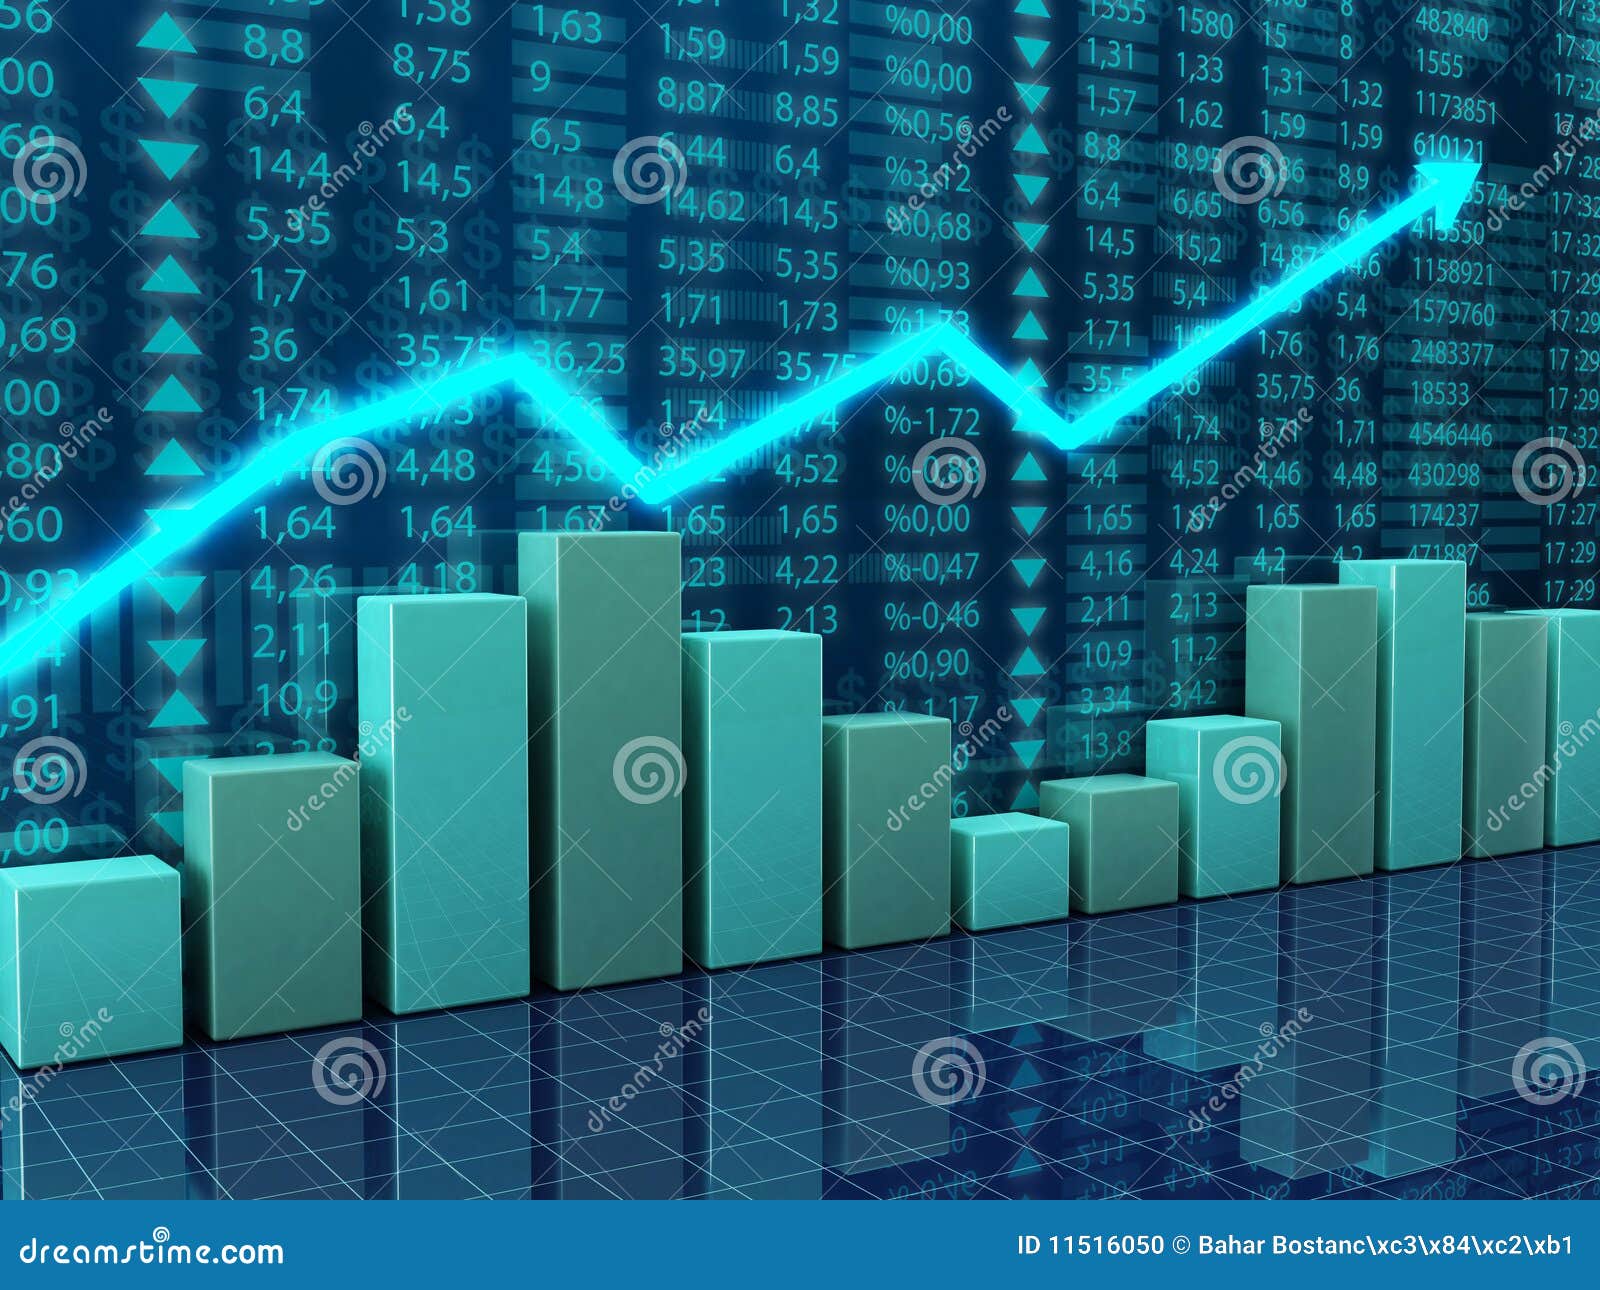 finance and economy charts